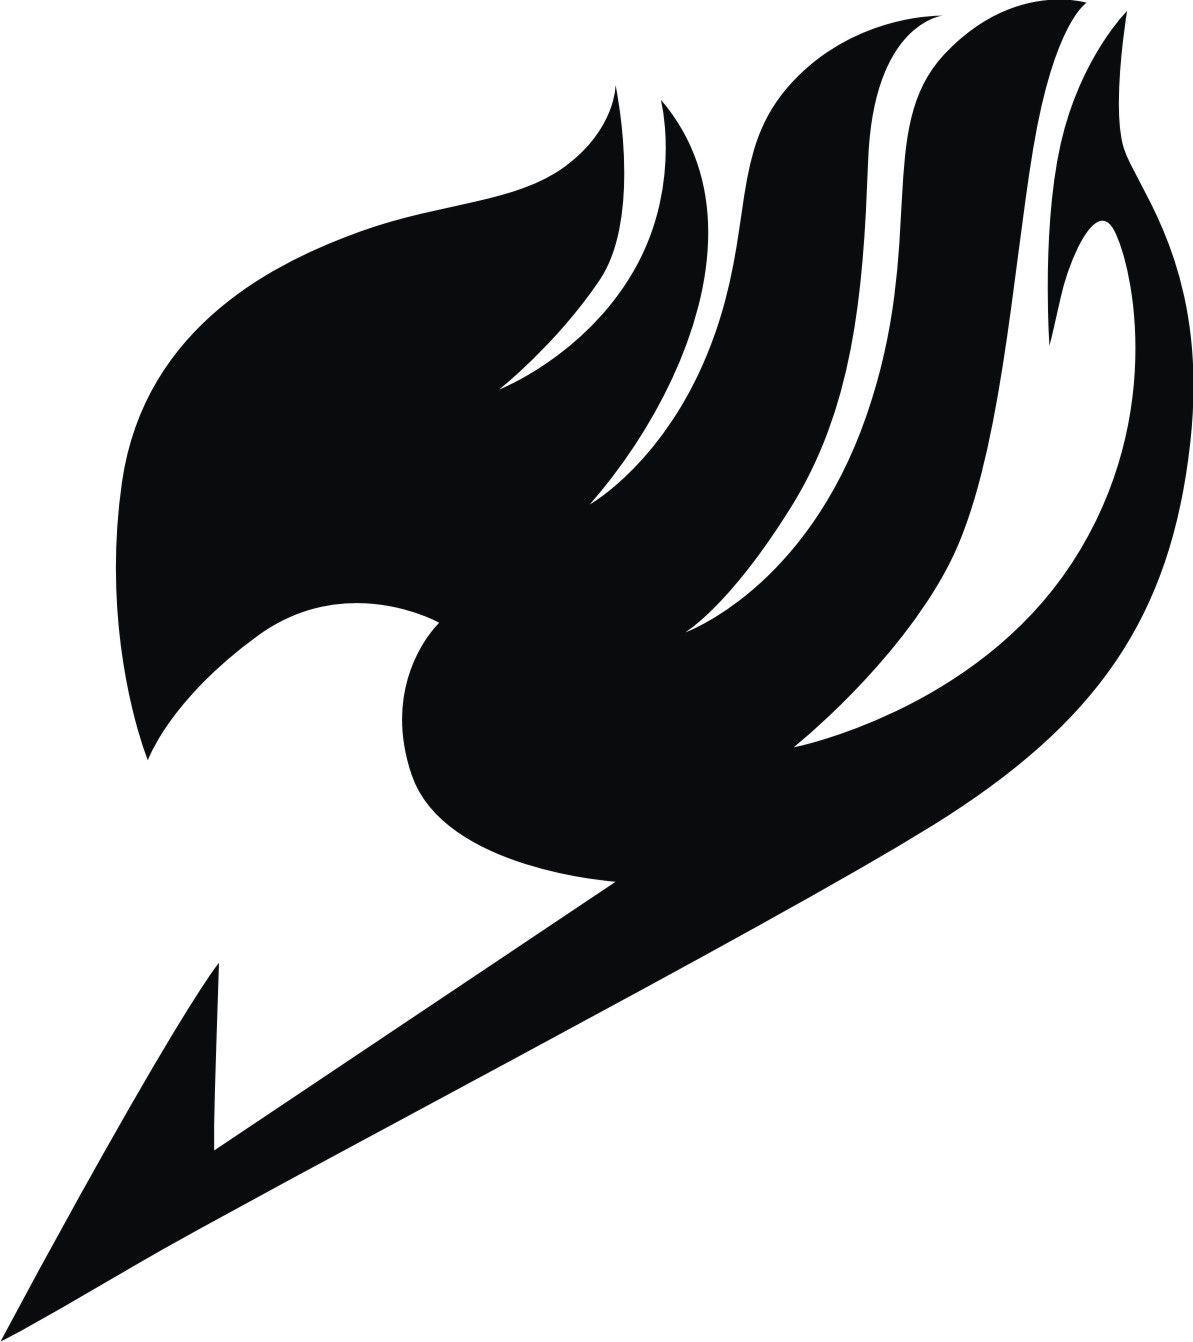 Fairy Tail Logo Wallpaper. Wallpaper, Background, Image, Art